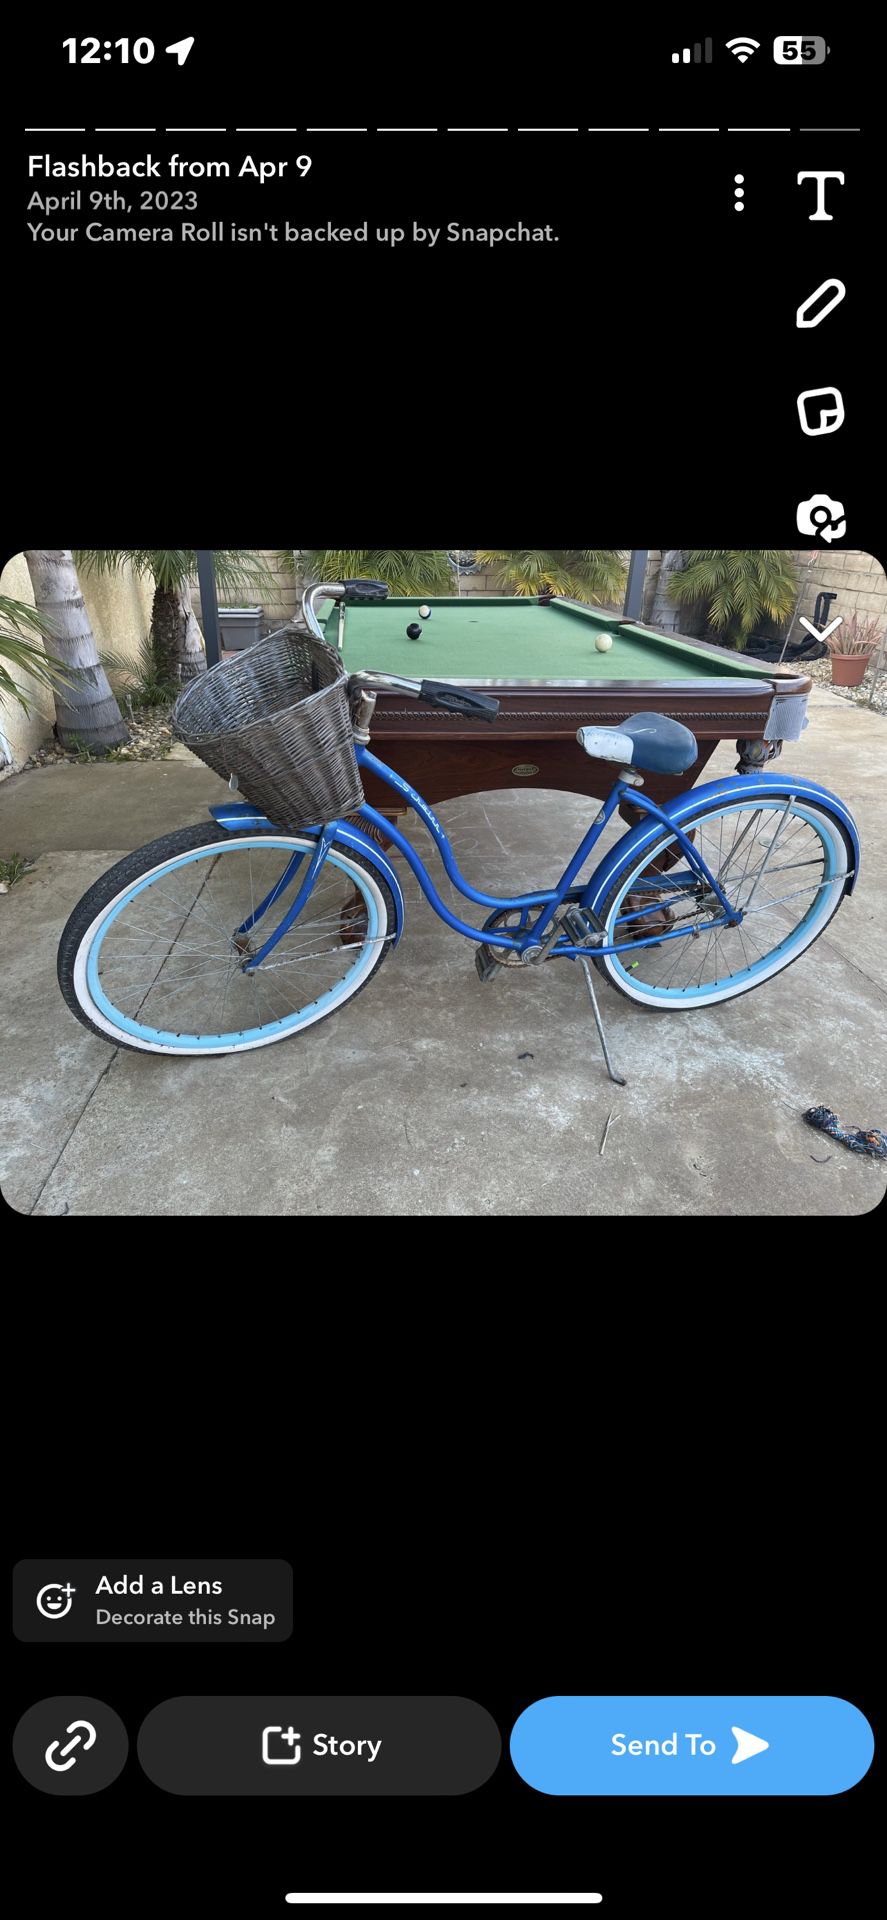 2 Vintage Schwinn Hollywood Bikes 